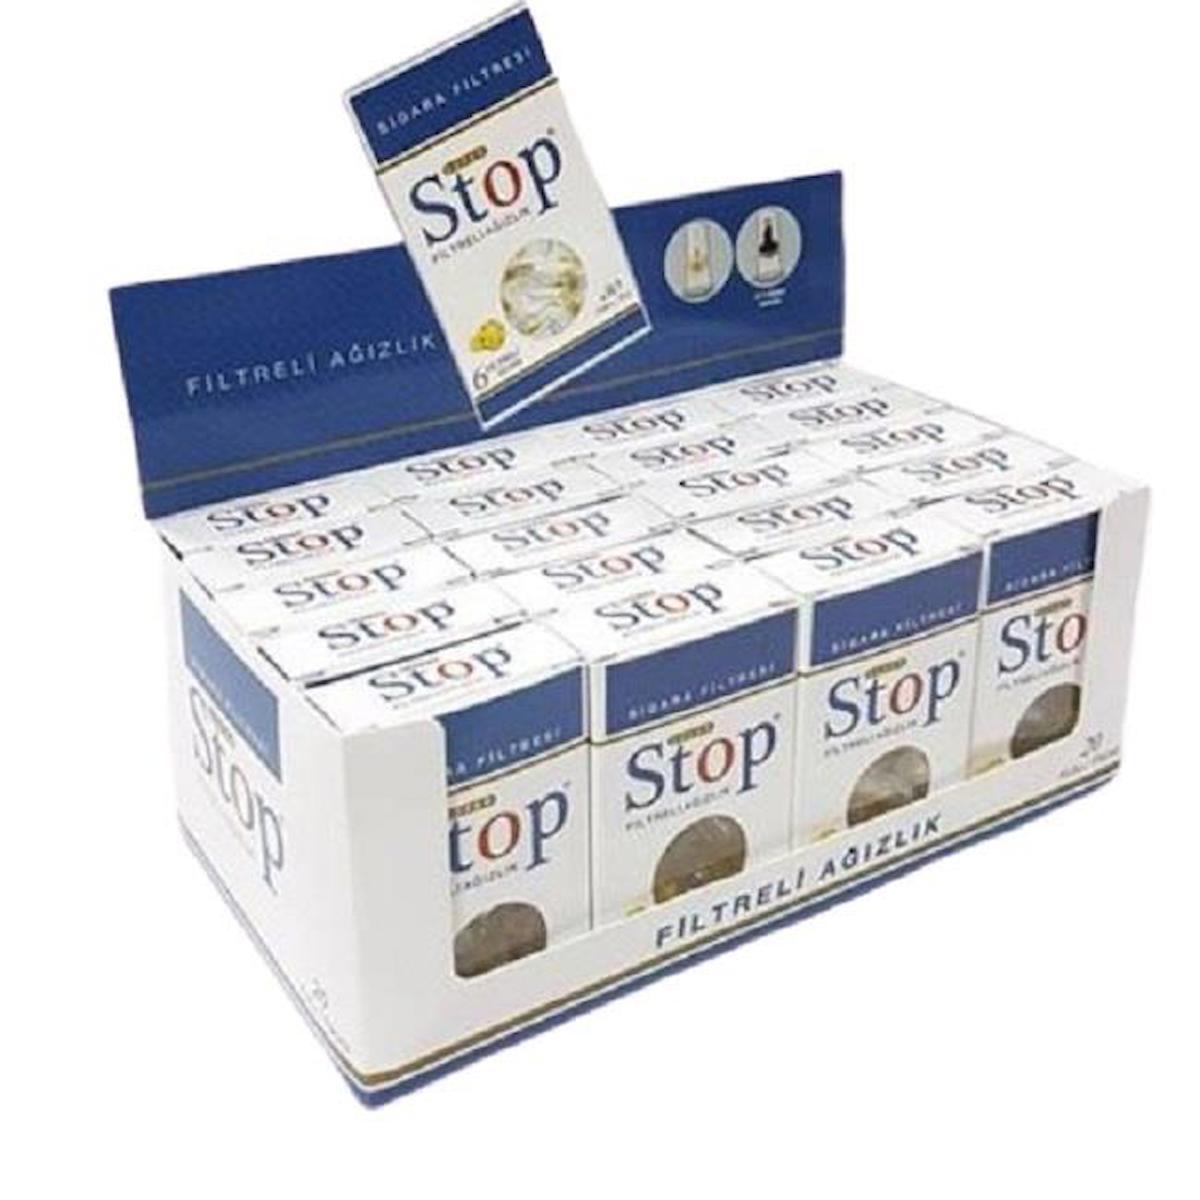 Stop Slim Filtreli Ağızlık İnce Sigara Filtresi 25 li x 24 Paket